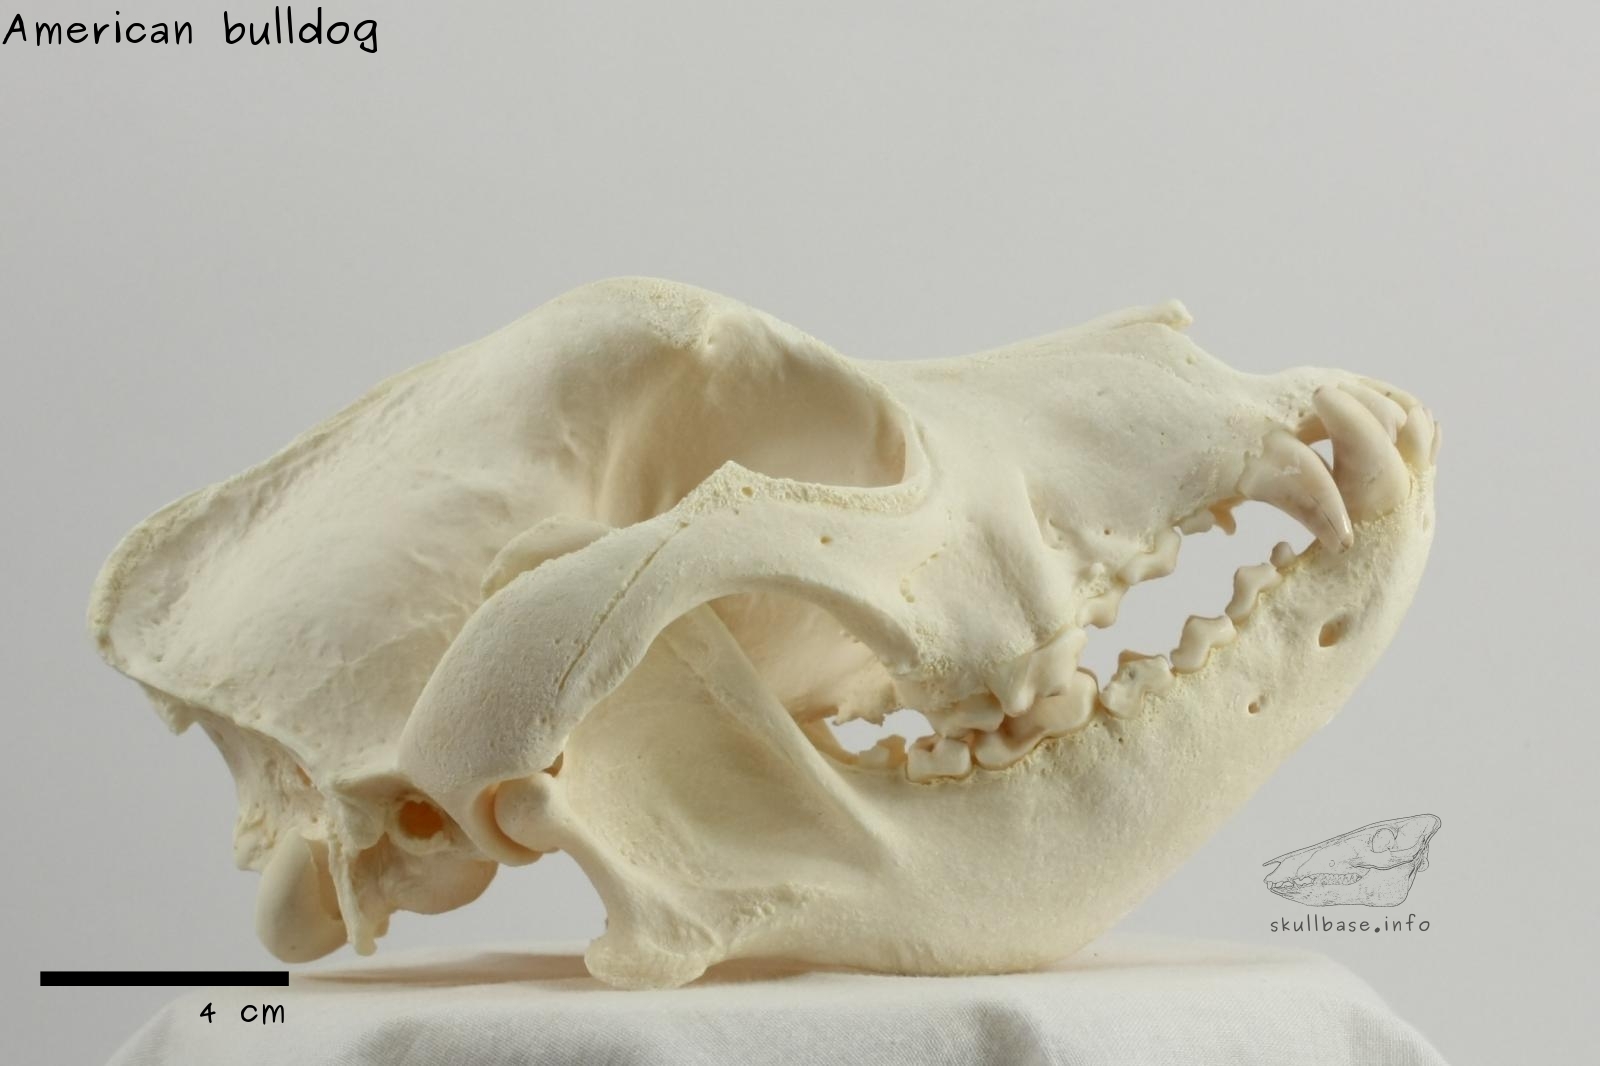 American bulldog (Canis lupus familiaris) skull lateral view